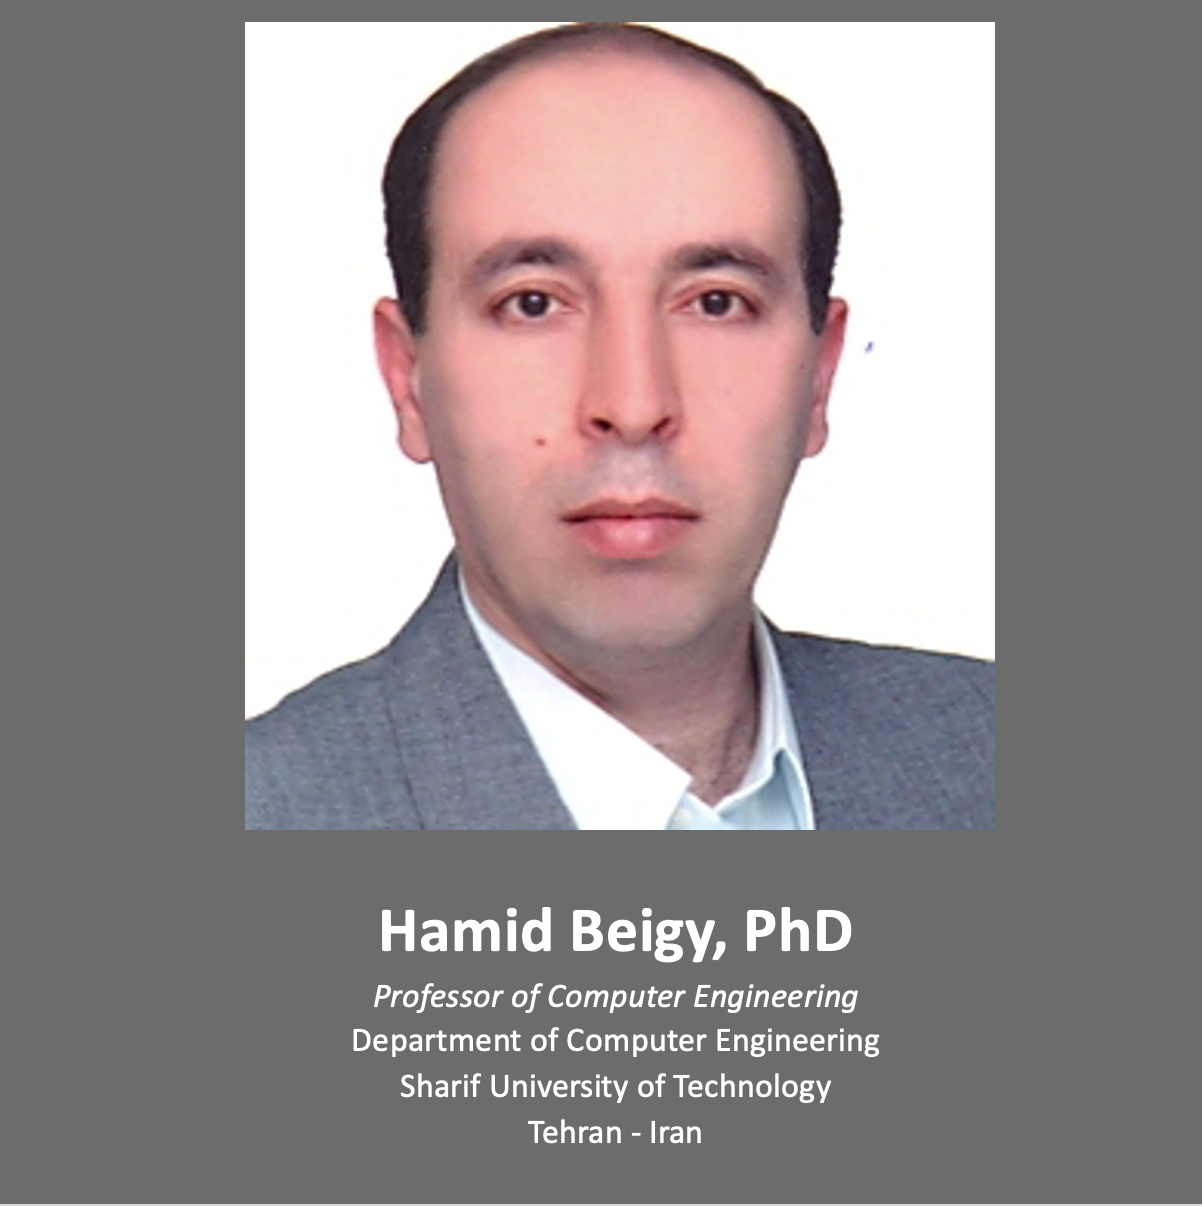 Hamid Beigy